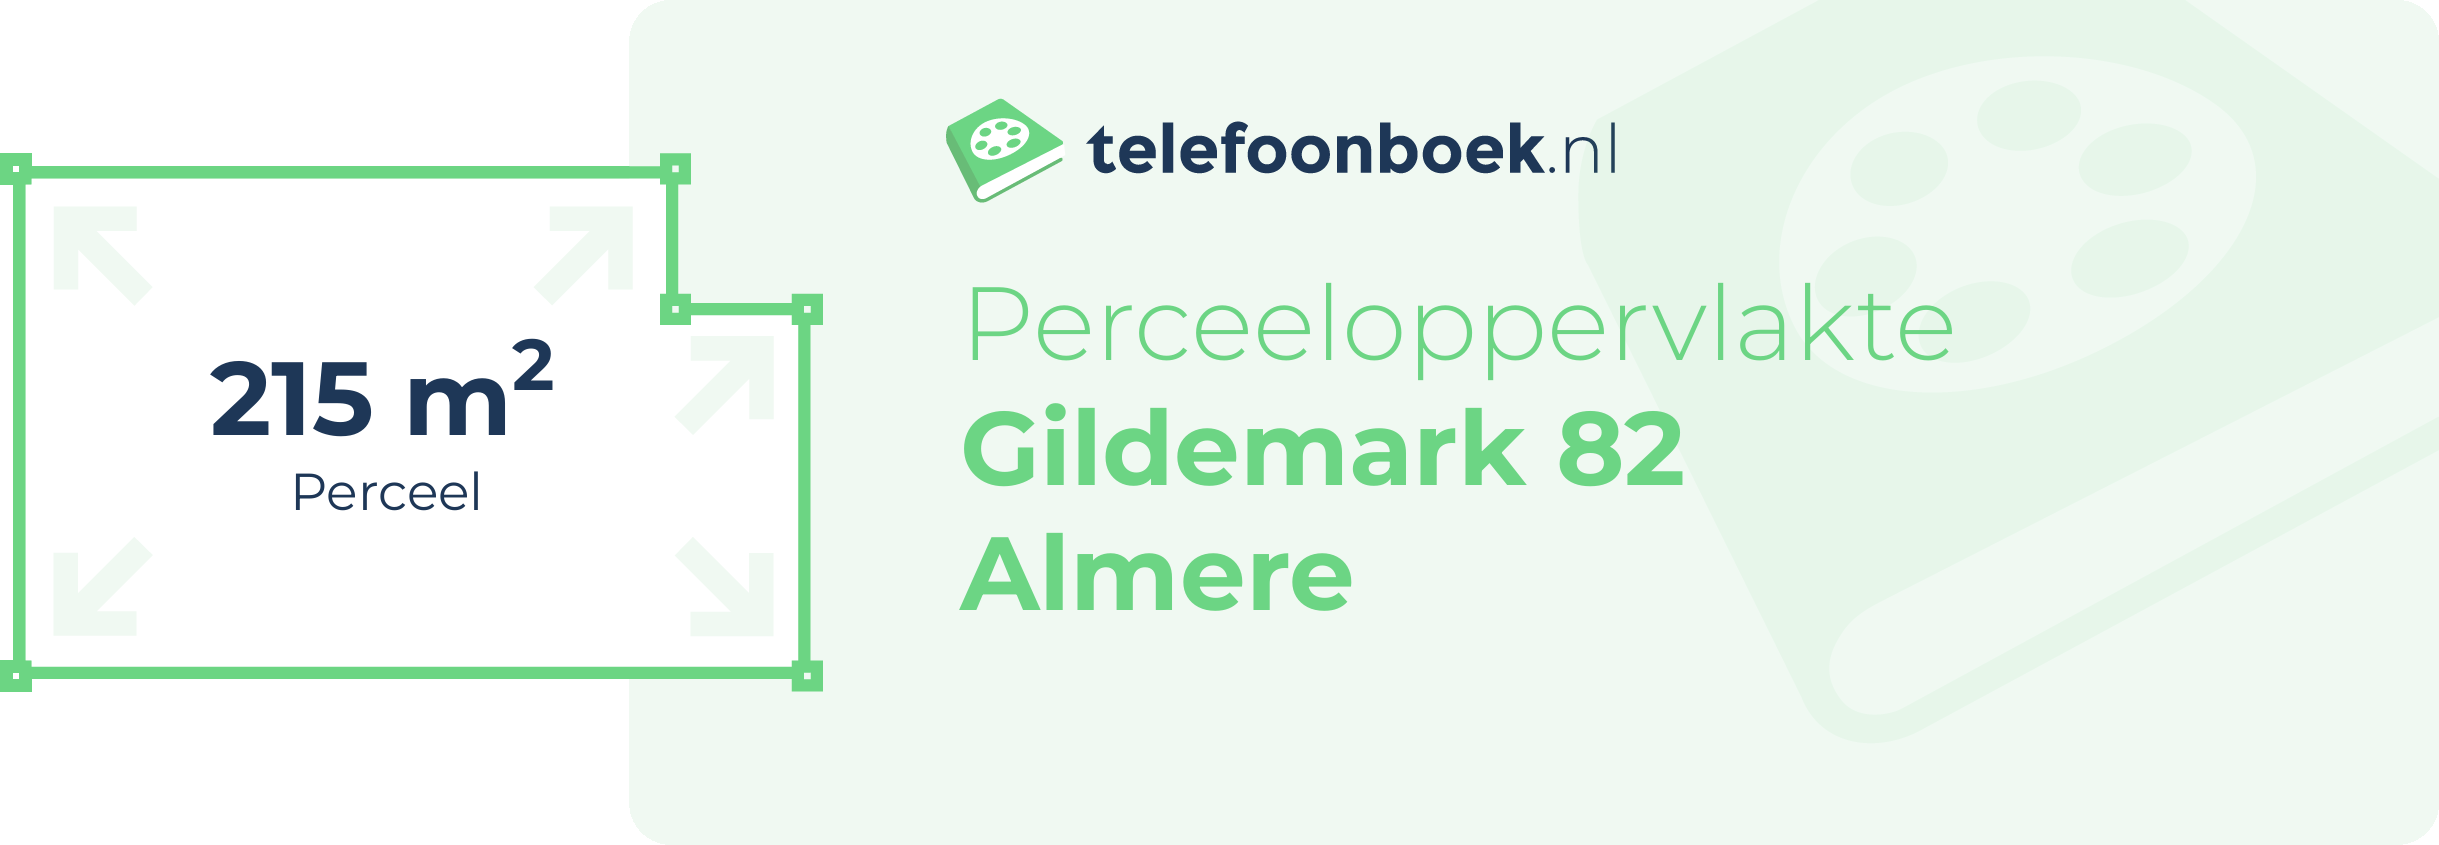 Perceeloppervlakte Gildemark 82 Almere